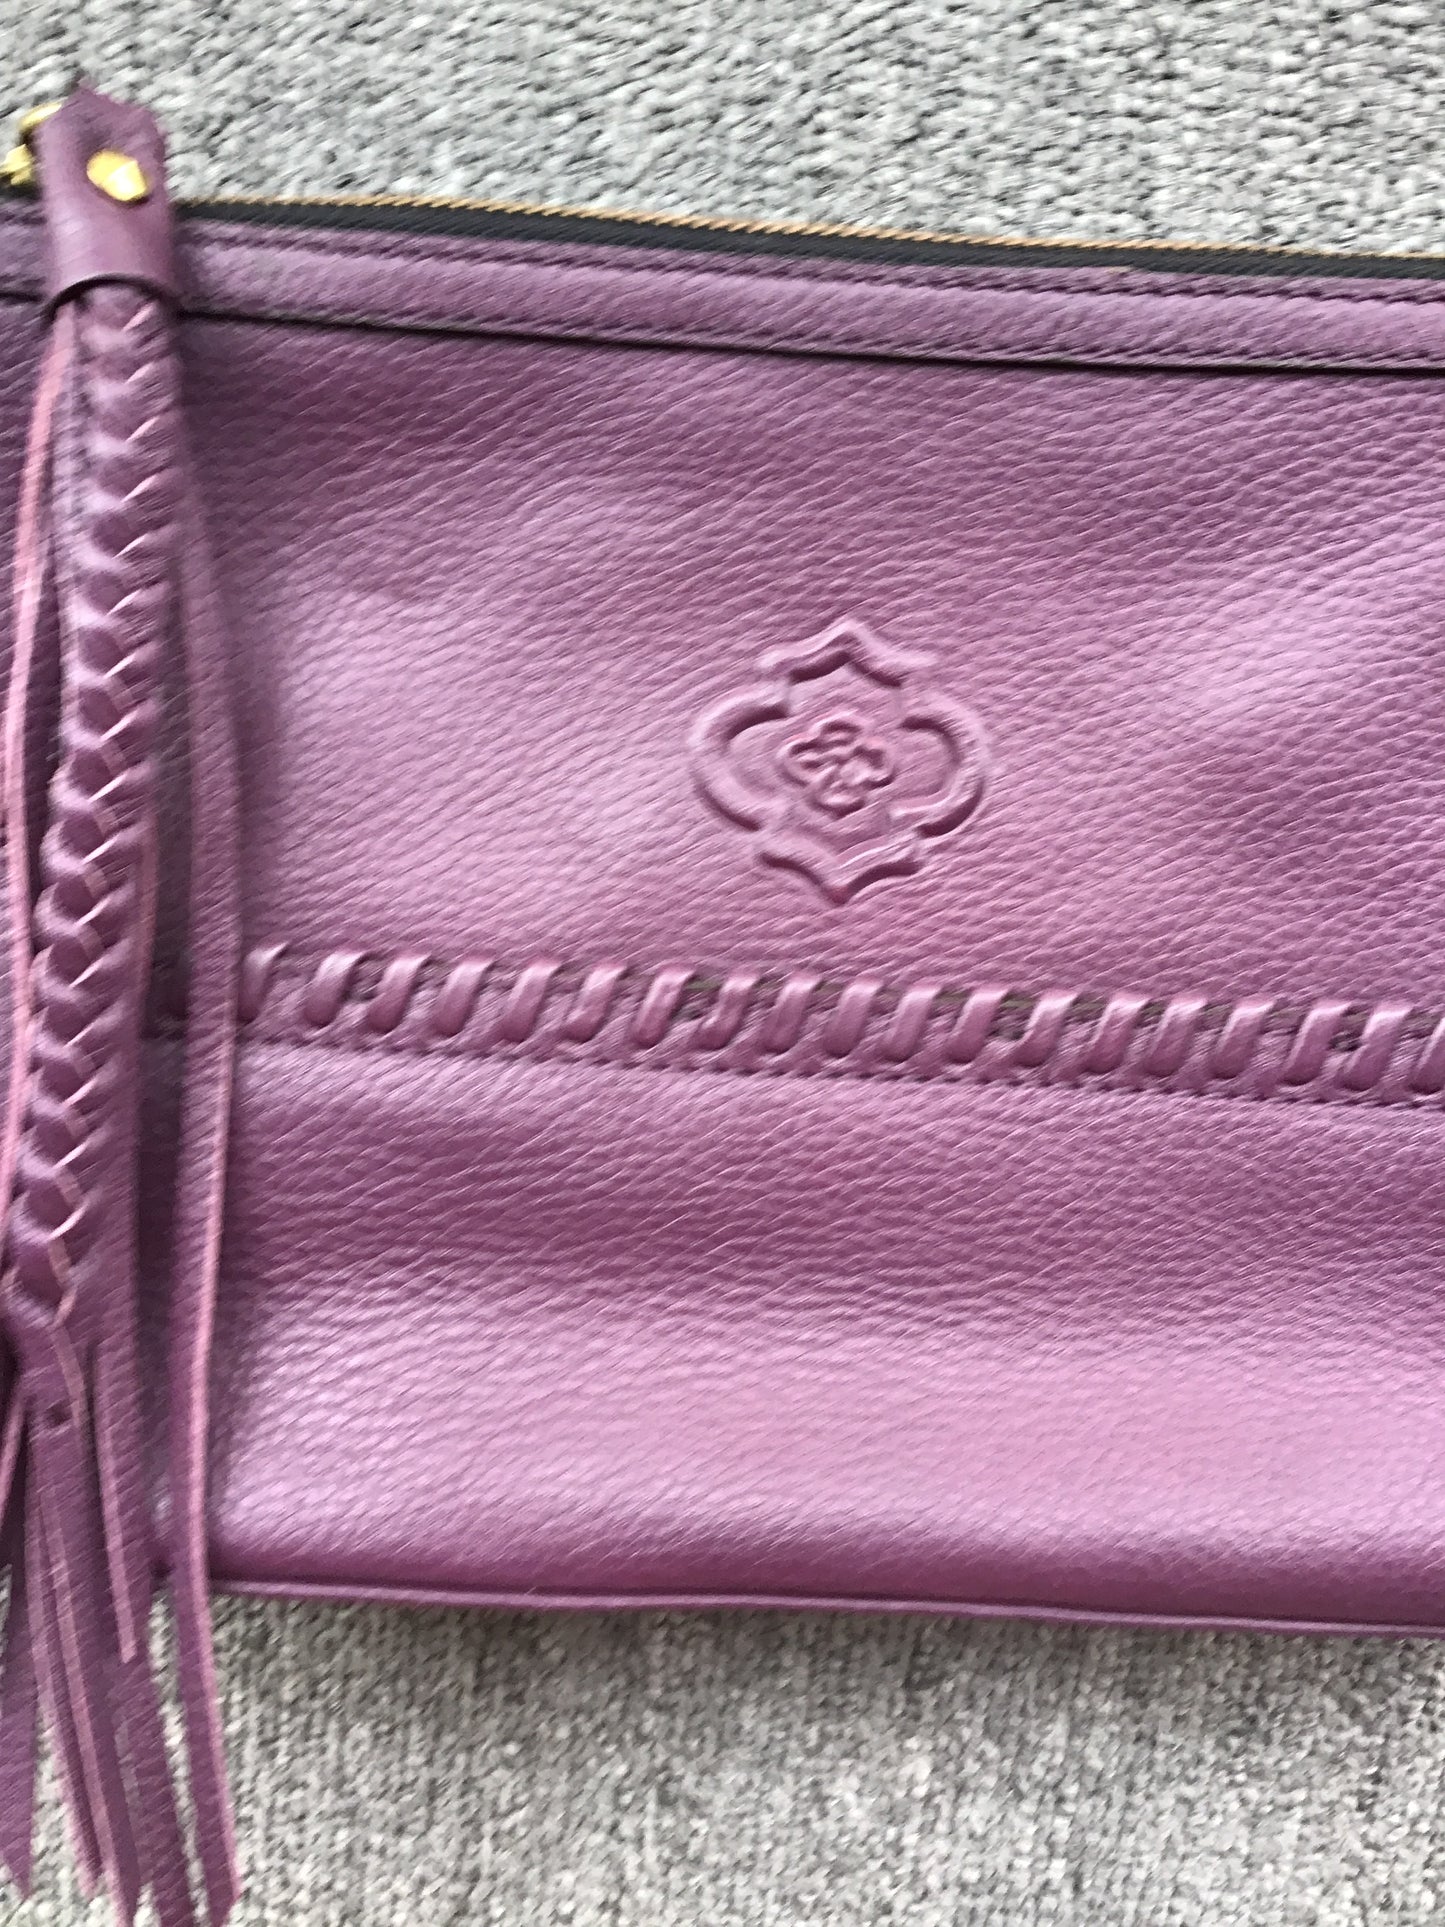 orYany Purple Leather Zippered Clutch w/Tassels